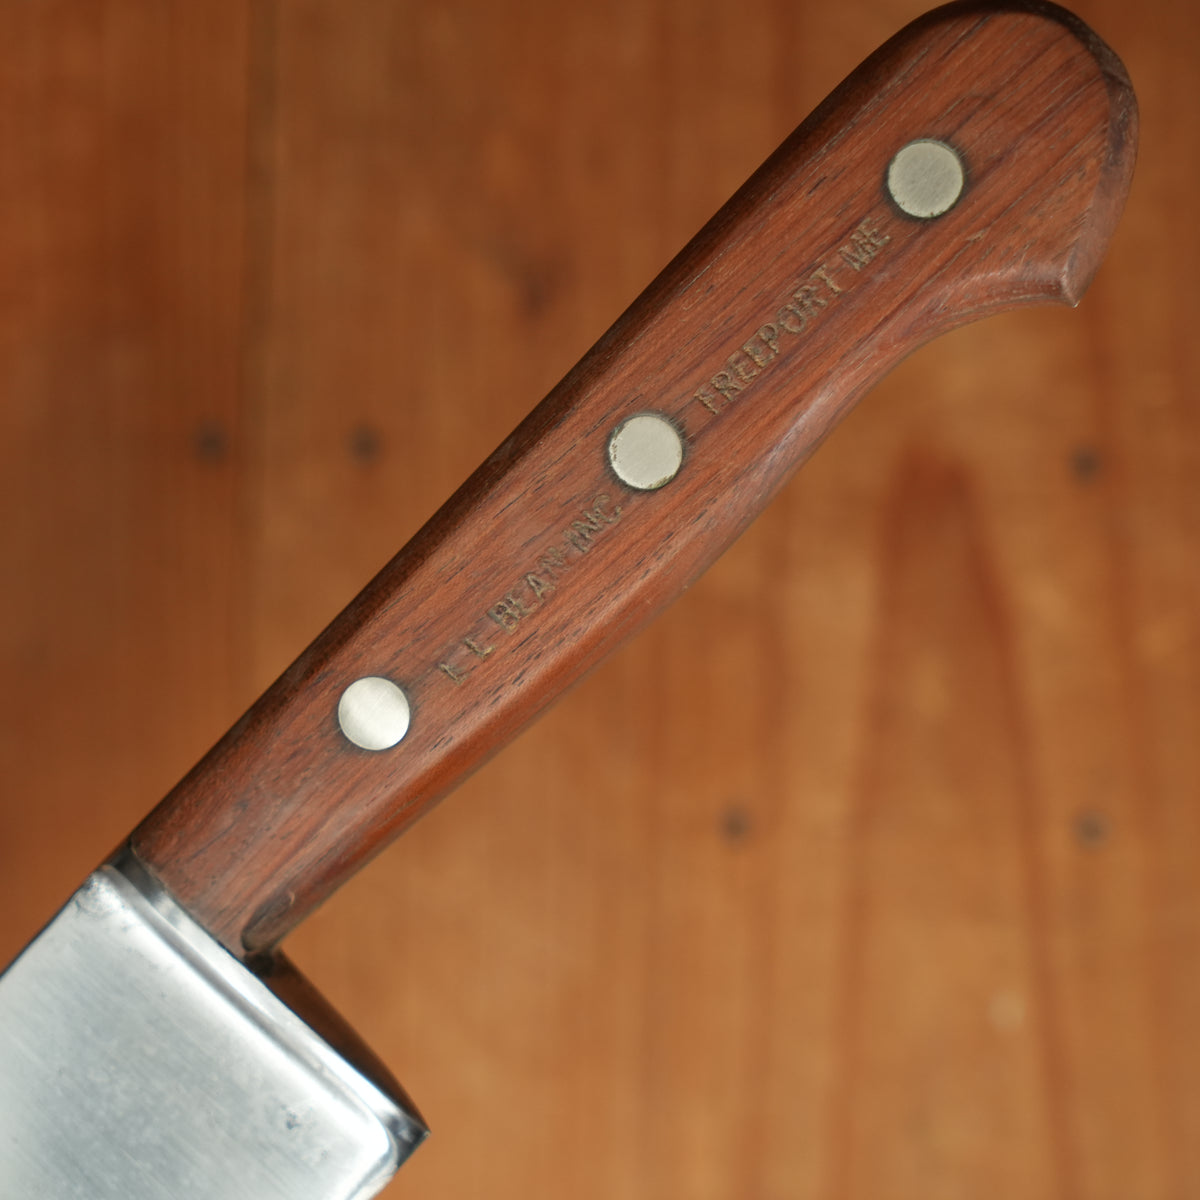 Dexter / LL Bean 8.75” Chef Knife Carbon Steel 1950s/60s